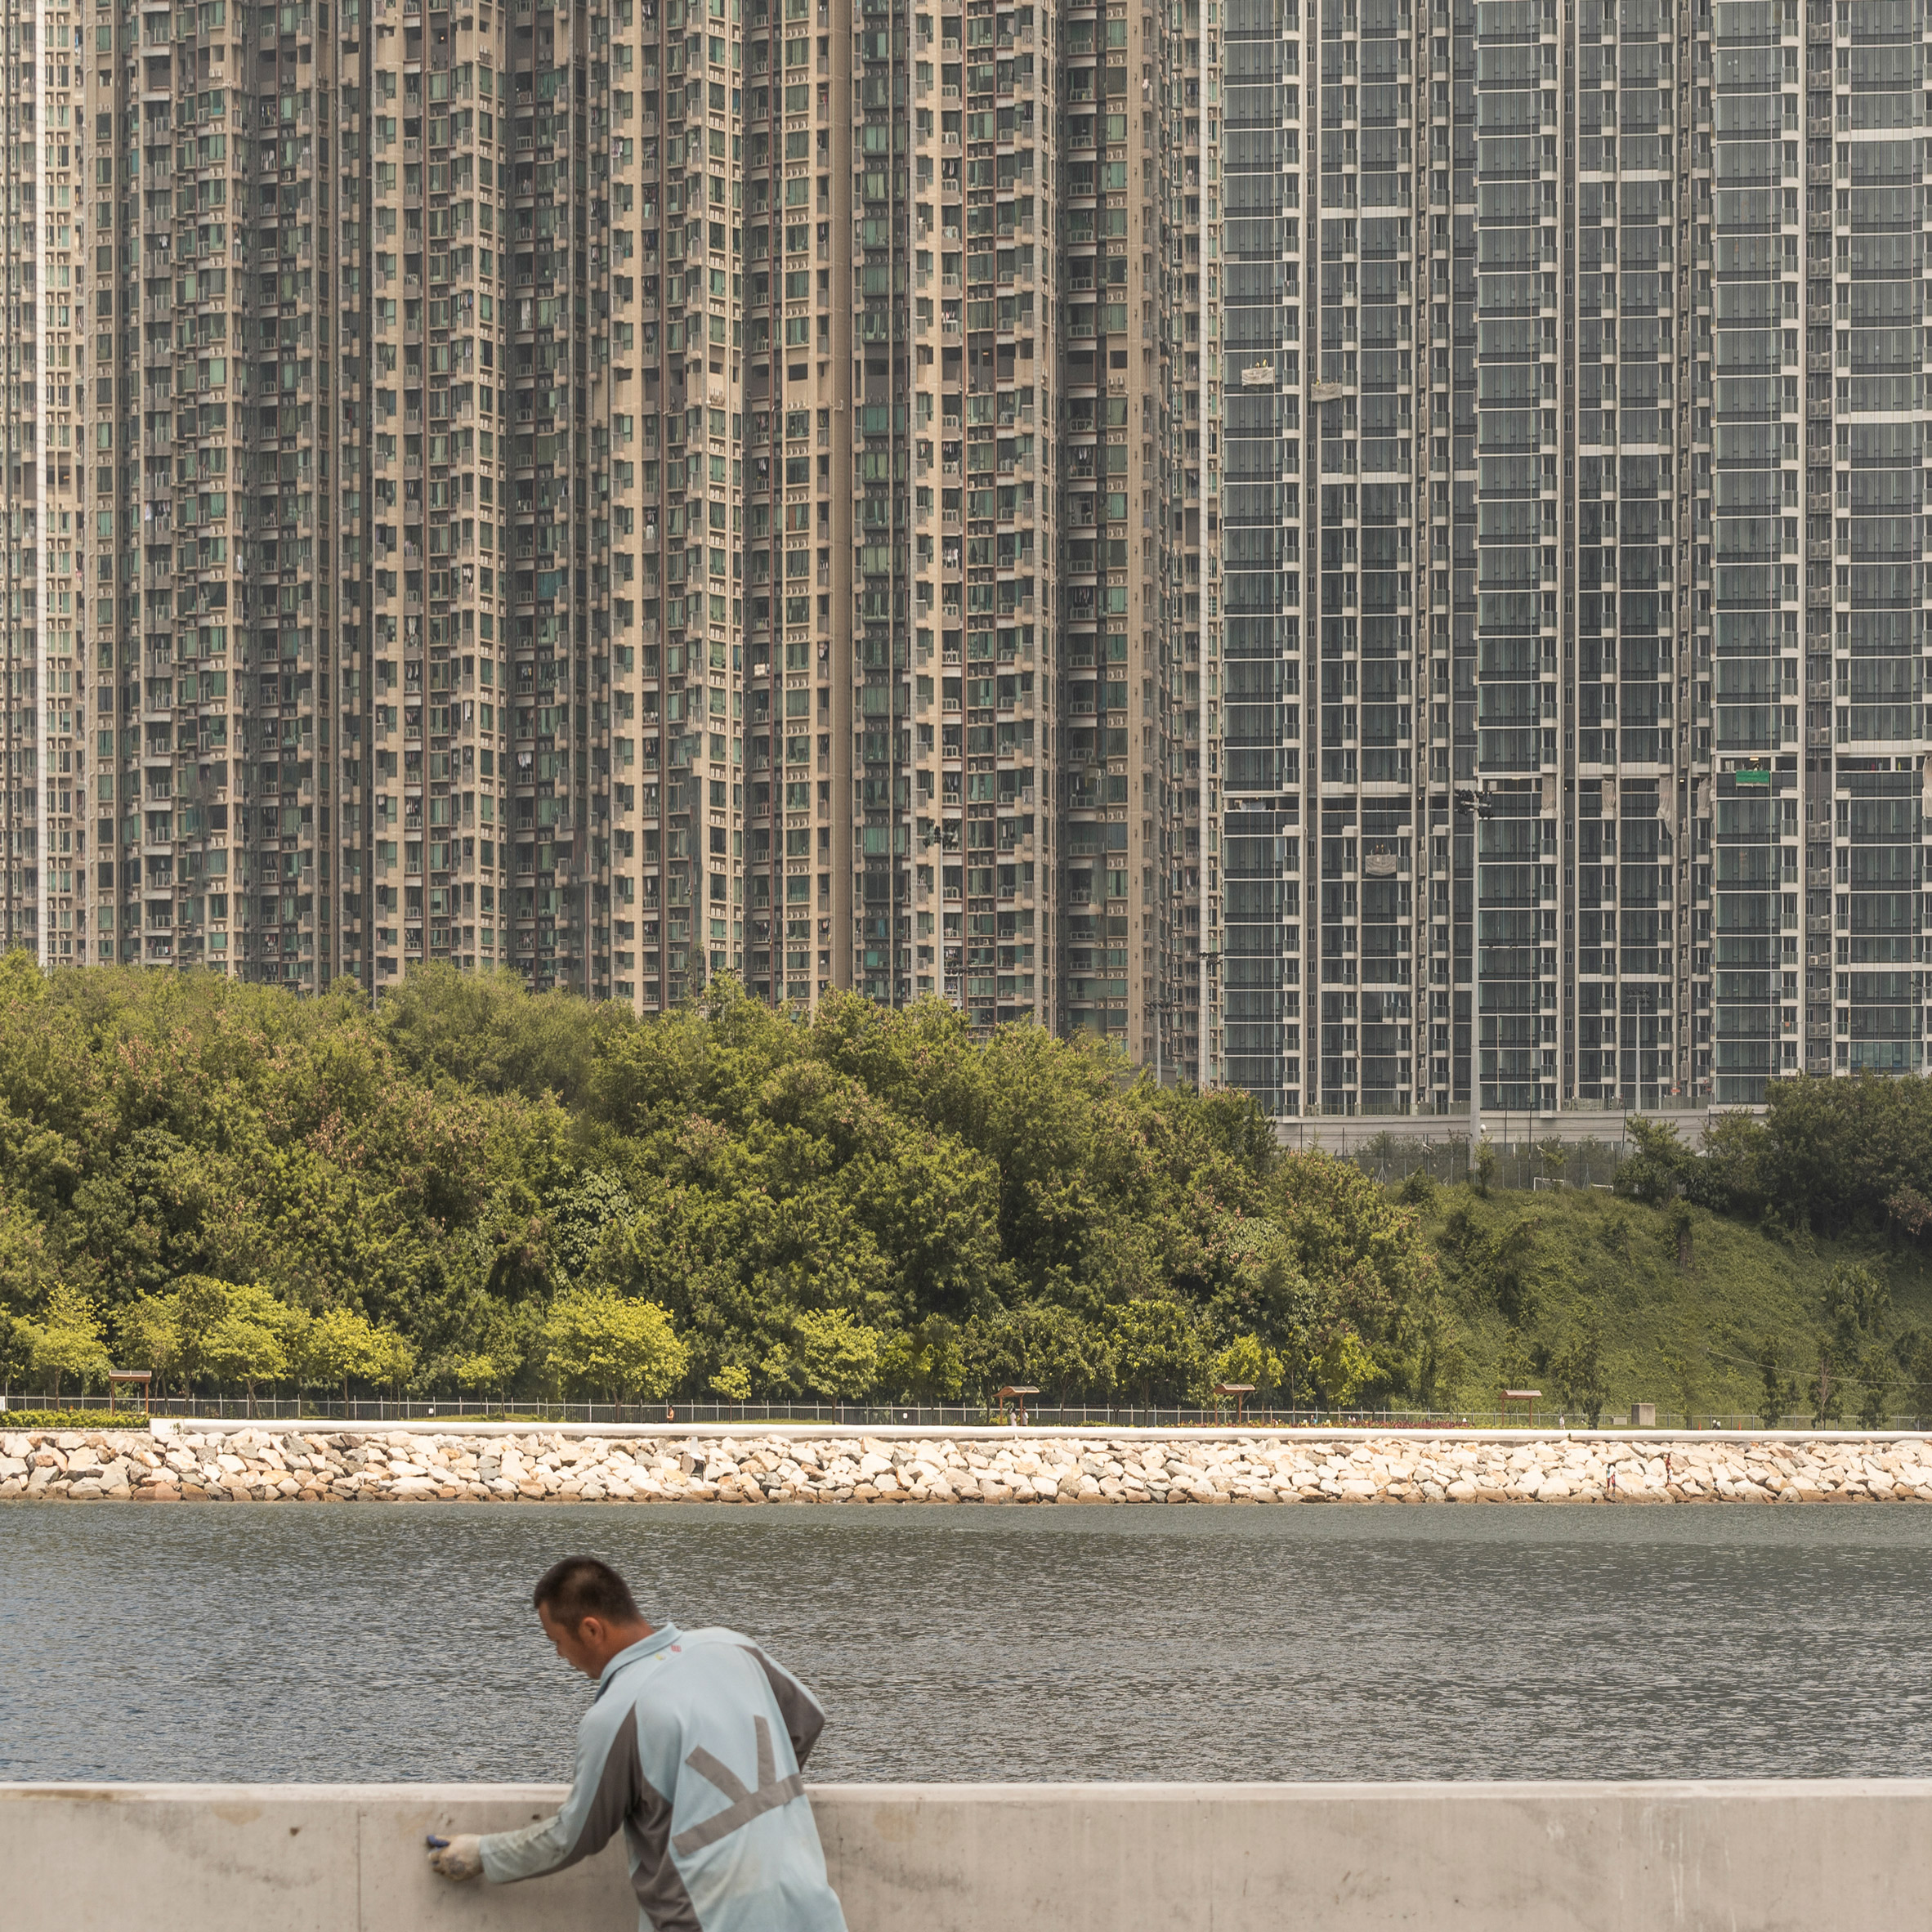 Eden of the Orient captures immense density of Hong Kong's housing